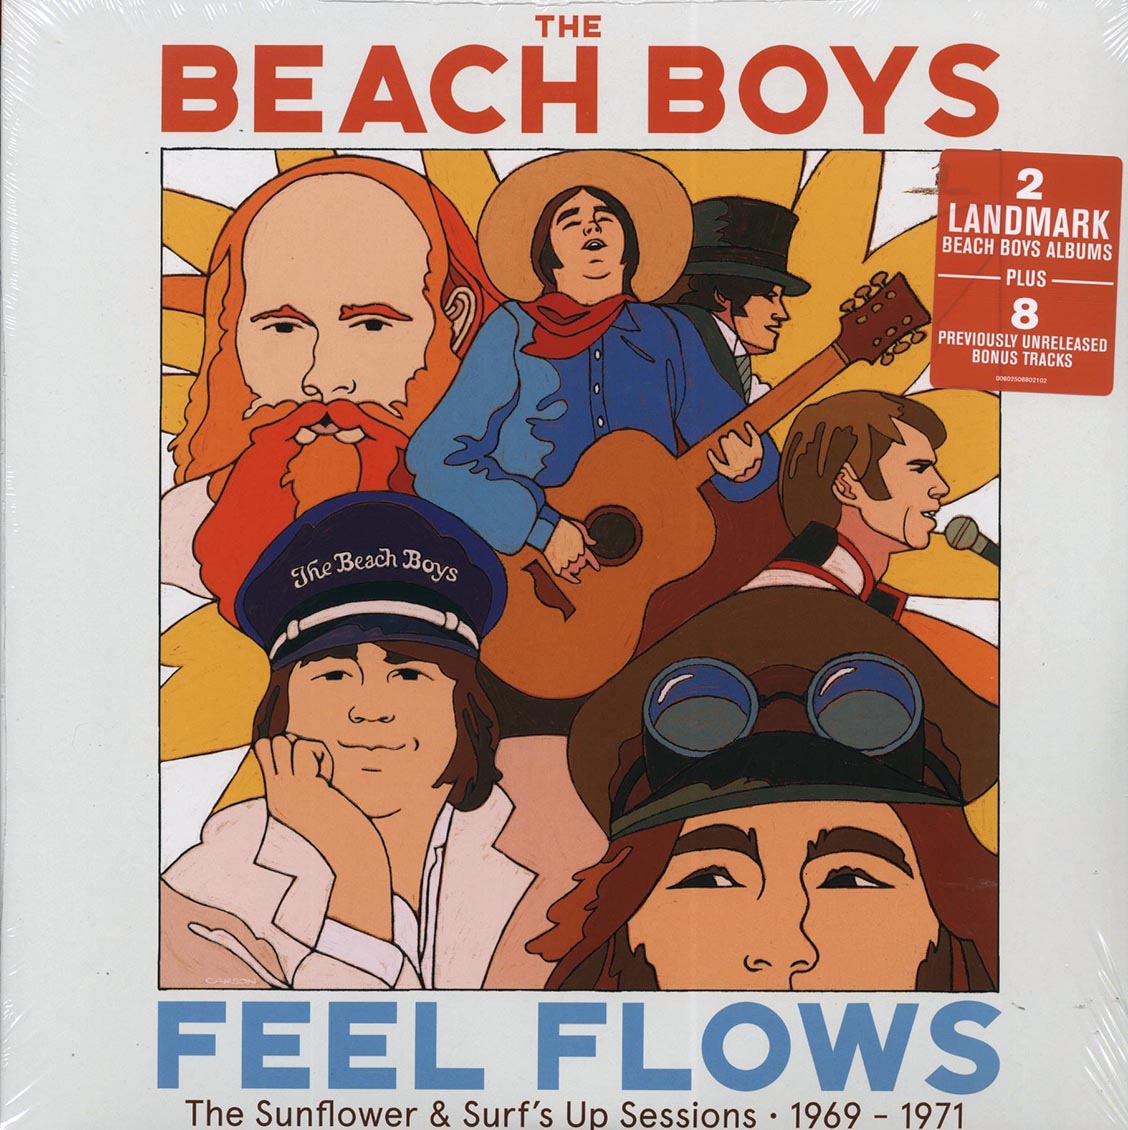 The Beach Boys - Feel Flows: The Sunflower + Surf's Up Sessions 1969-1971 (30 tracks) (+ 9 bonus tracks) (2xLP) - Vinyl LP